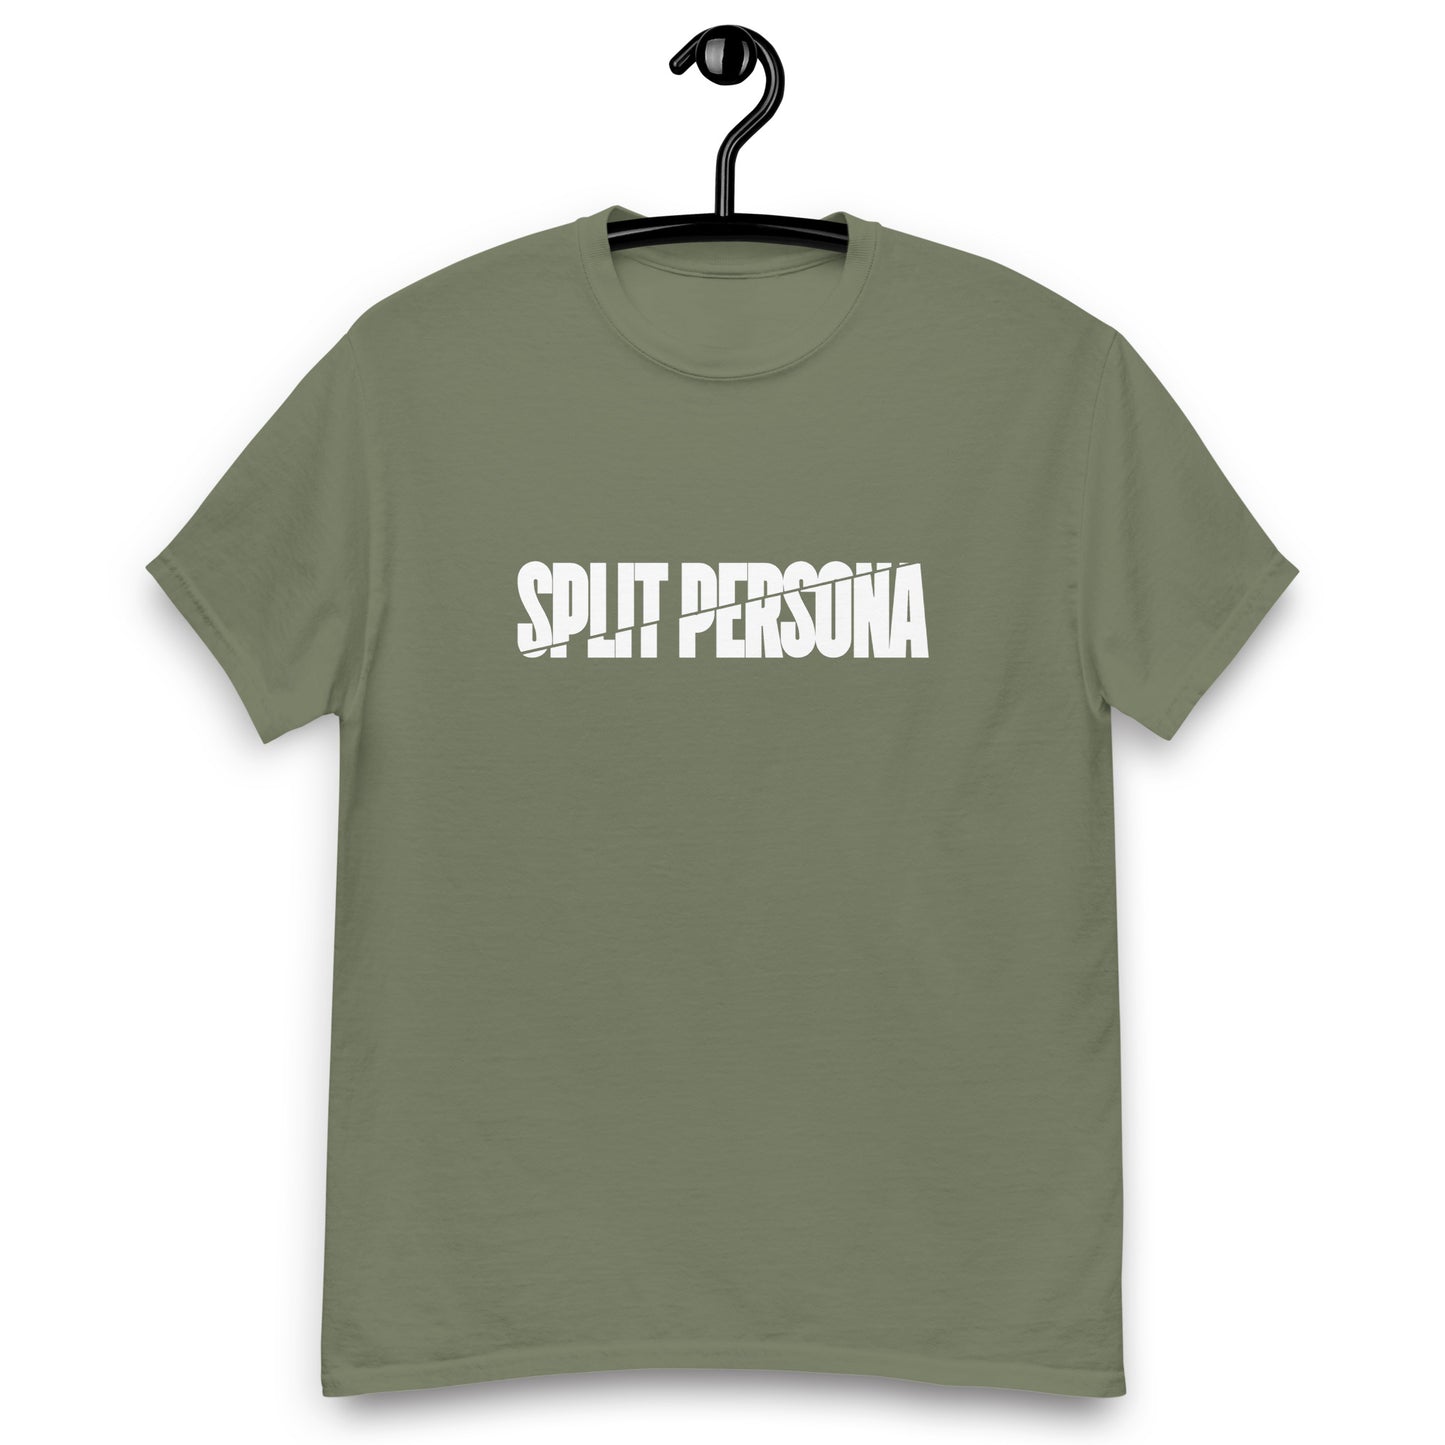 "SPLIT PERSONA" T-Shirt